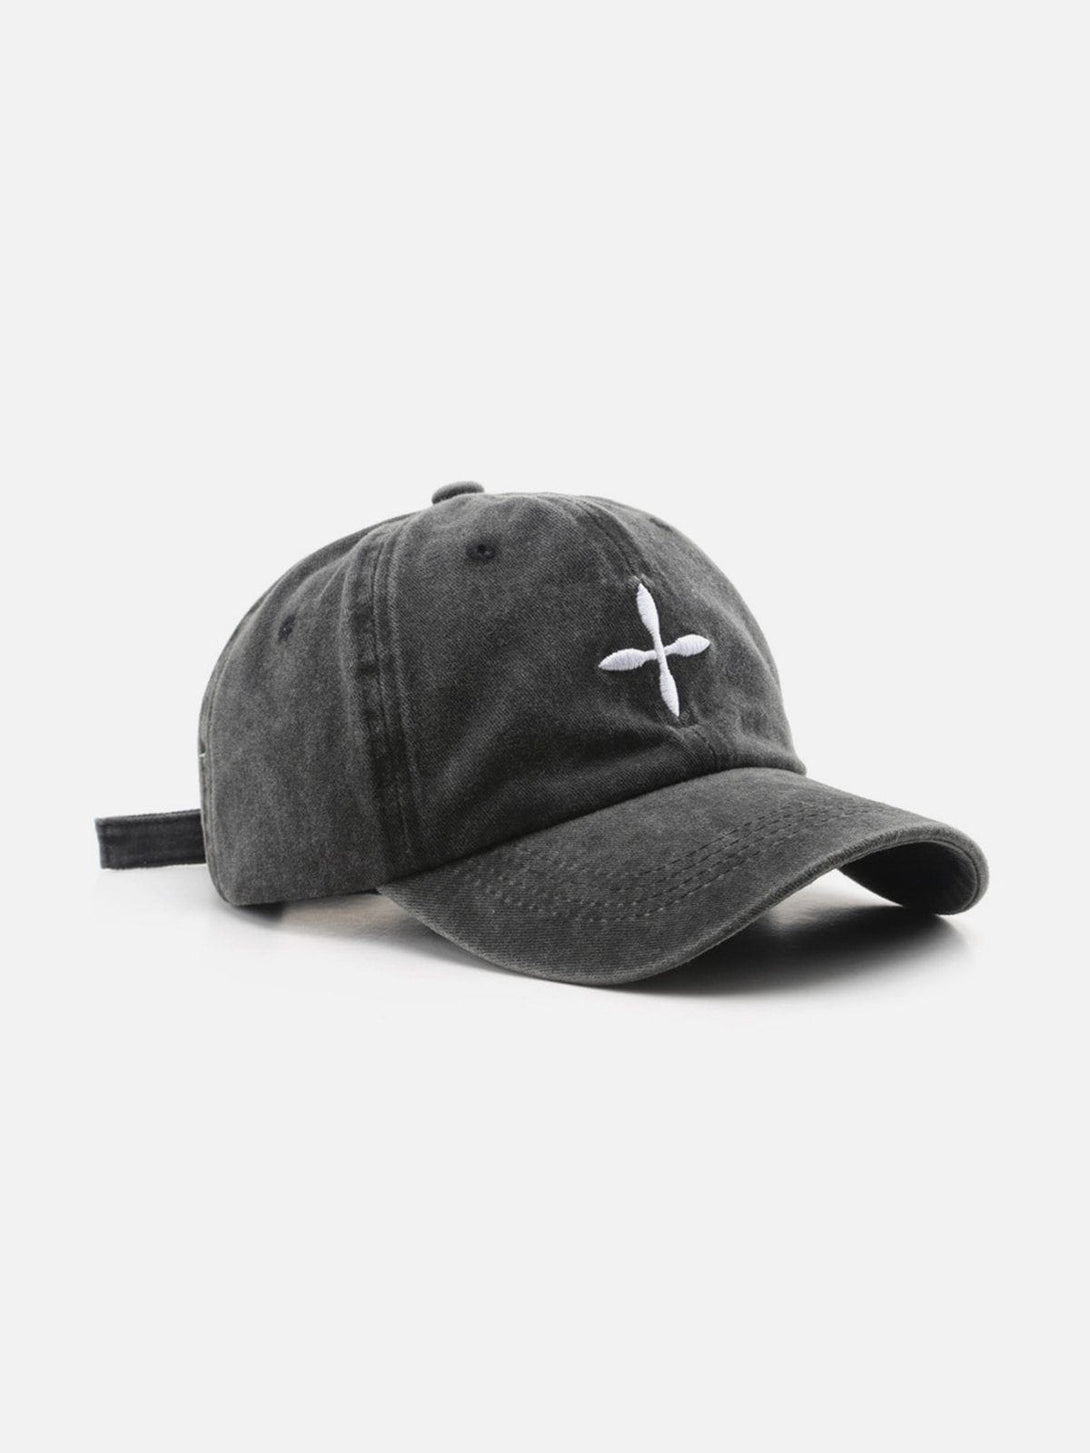 Majesda® - Embroidery Crucifix Baseball Cap- Outfit Ideas - Streetwear Fashion - majesda.com